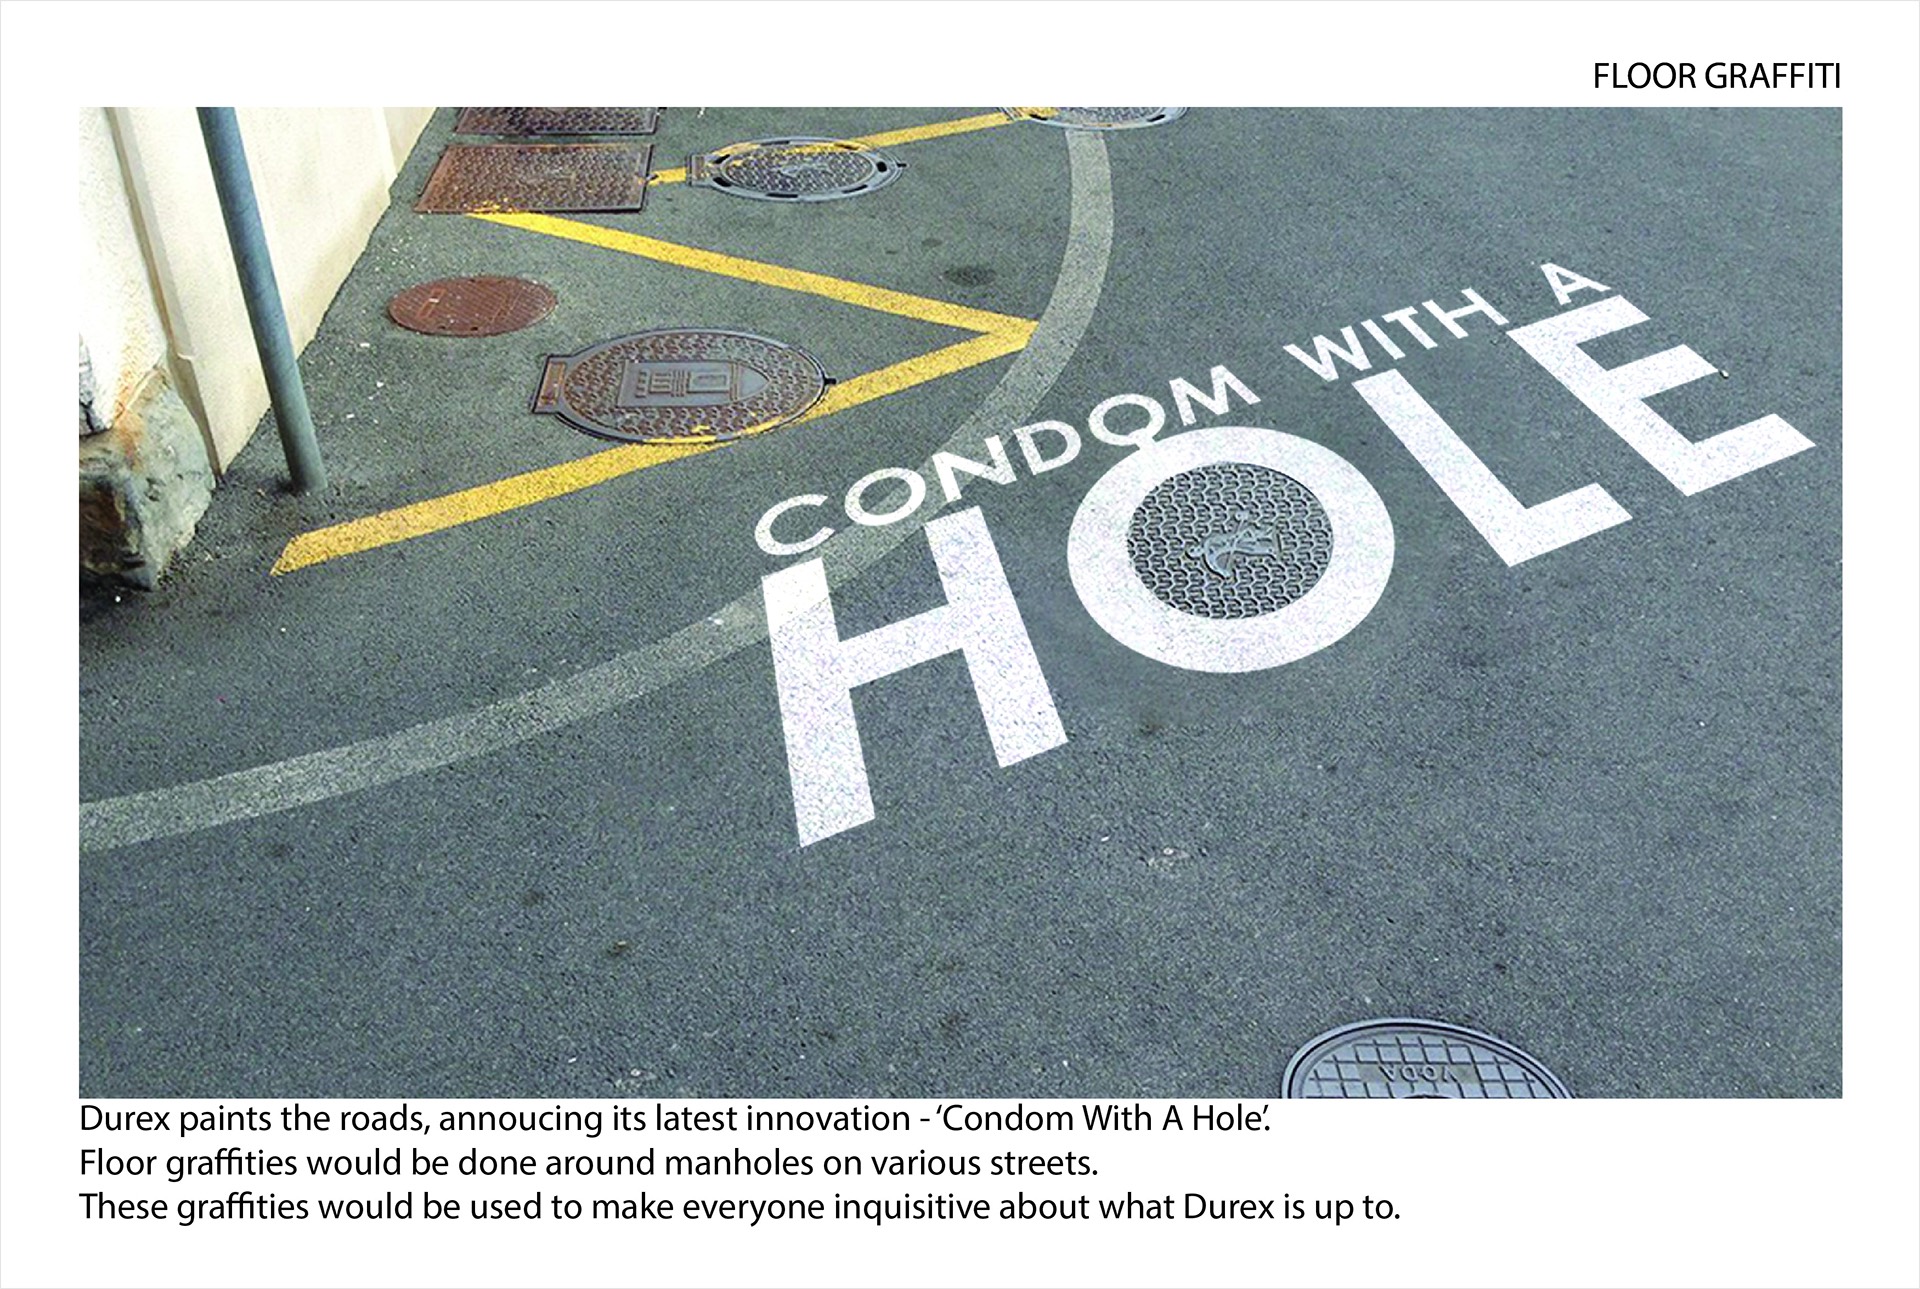 Durex Condom With A Hole by Miami Ad School